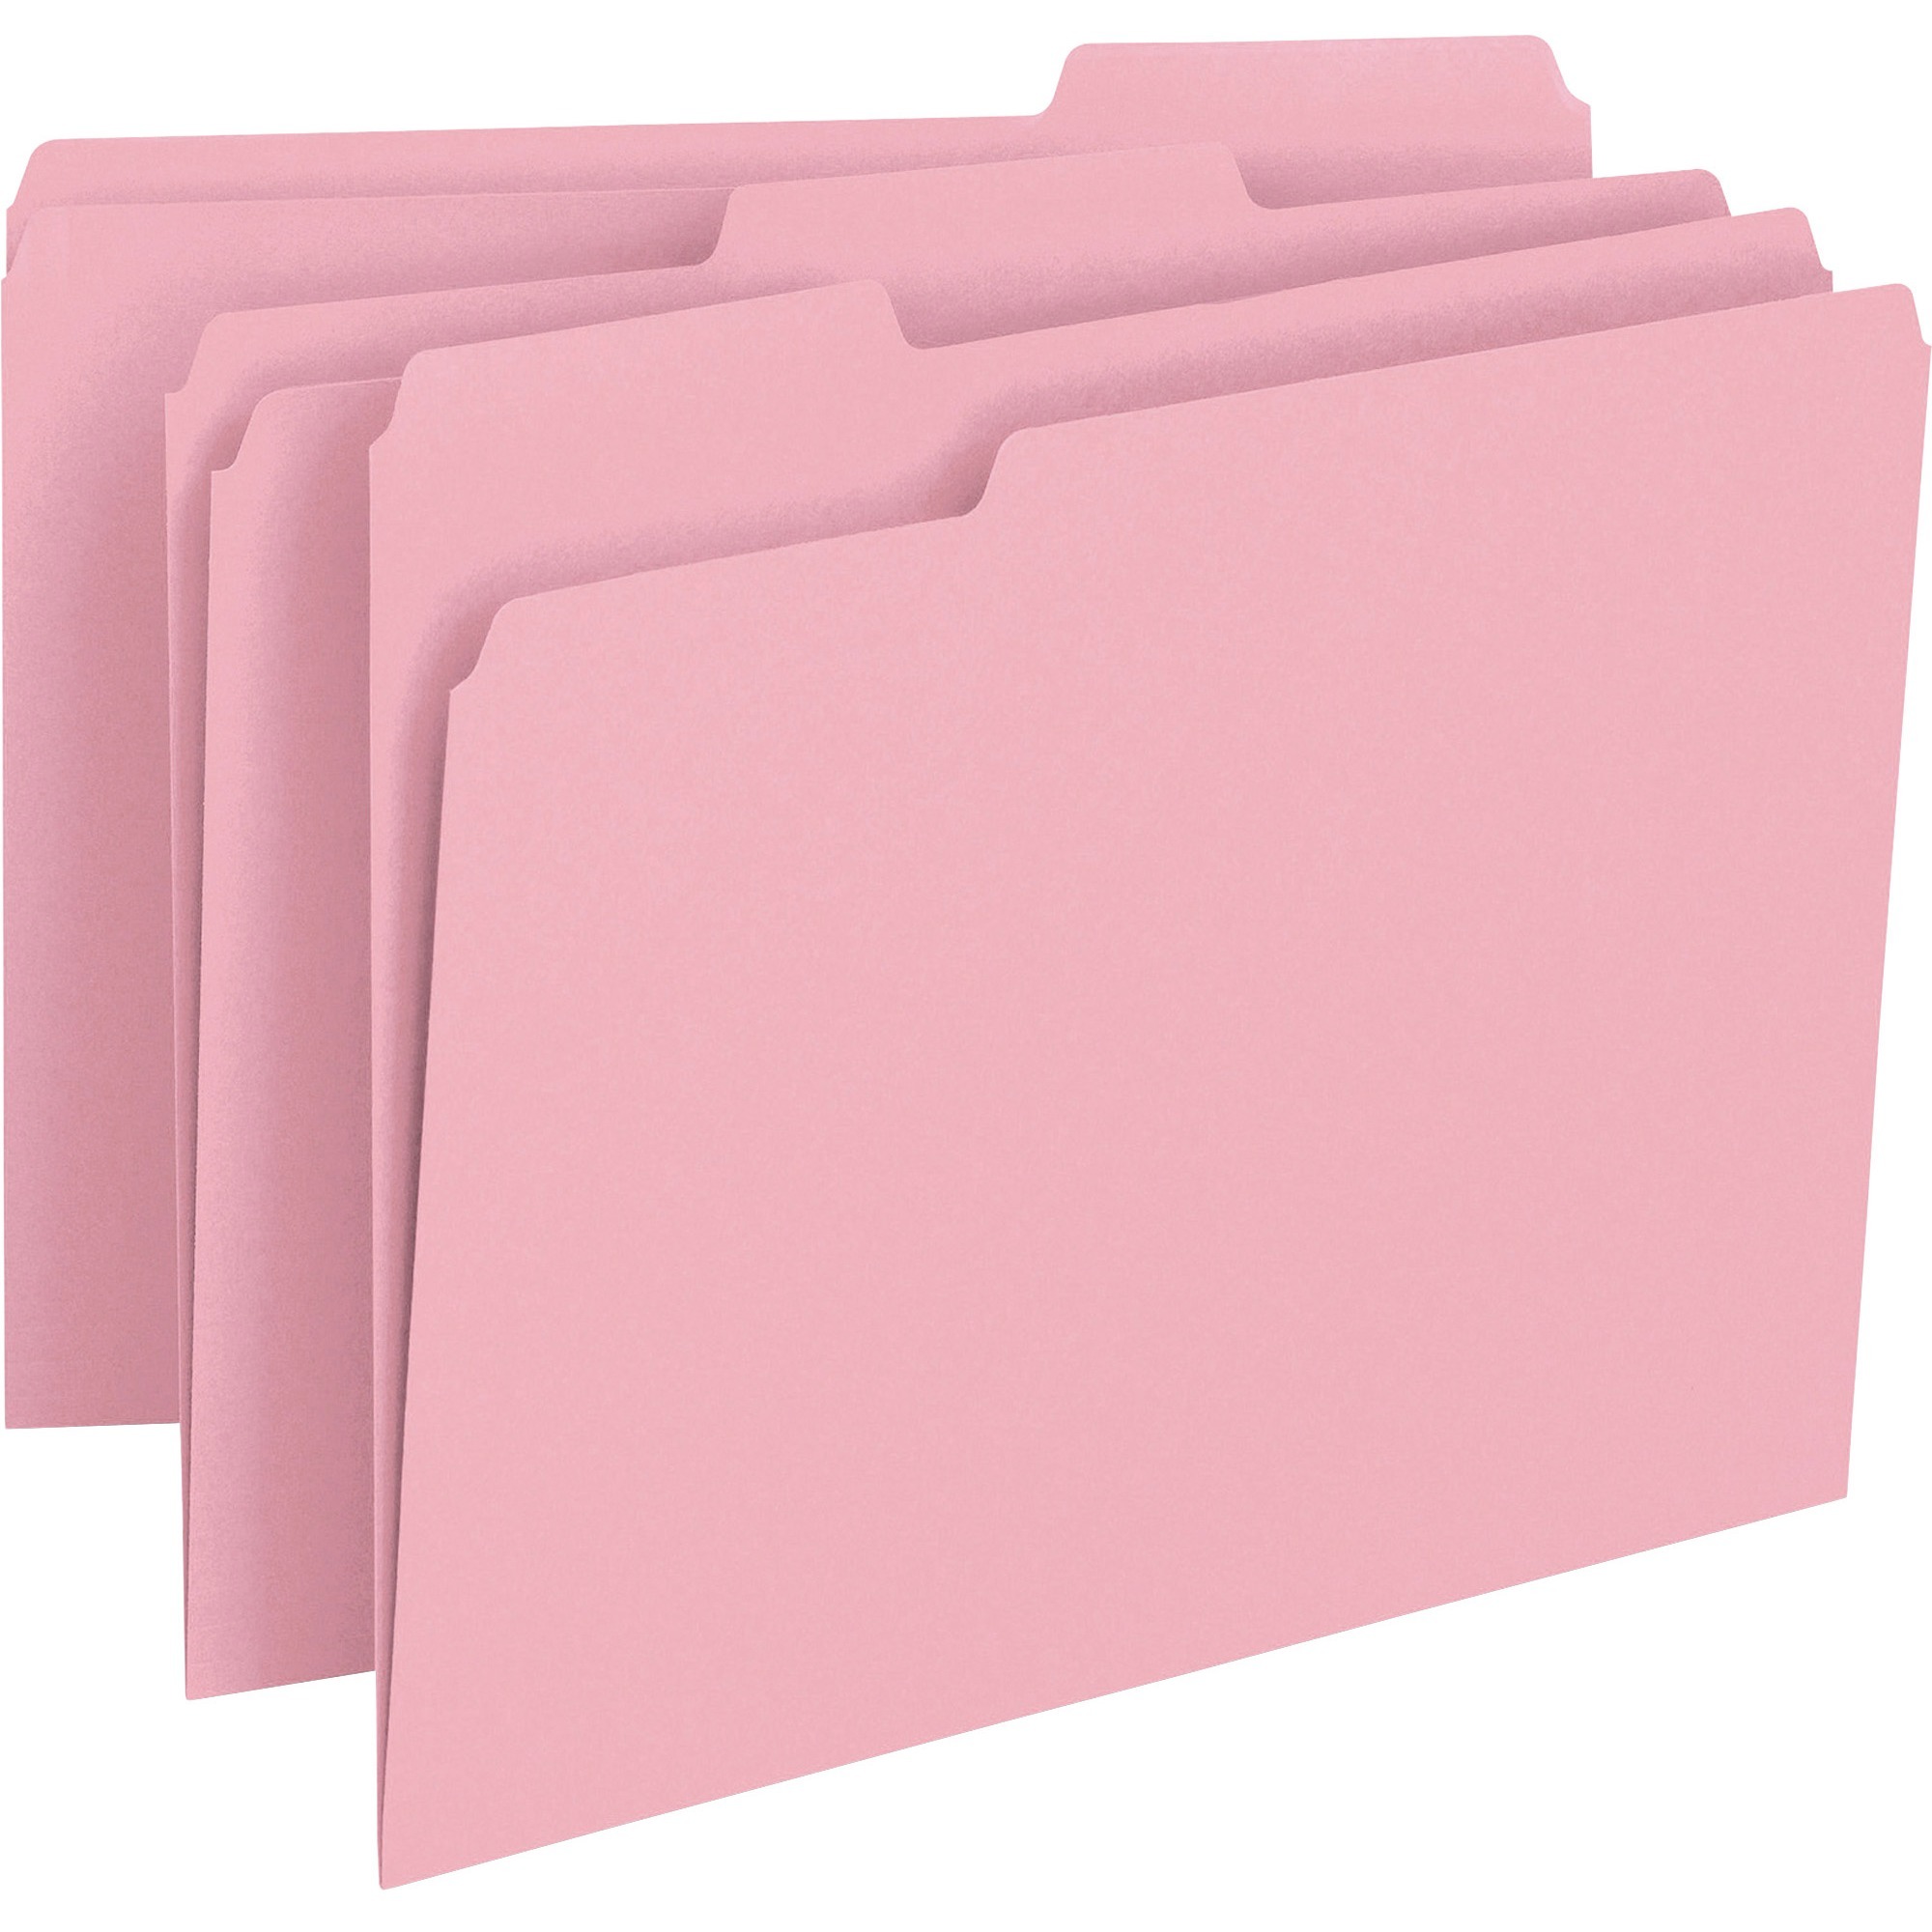 File Folders, 1/3 Cut Top Tab, Letter, Pink, 100/Box